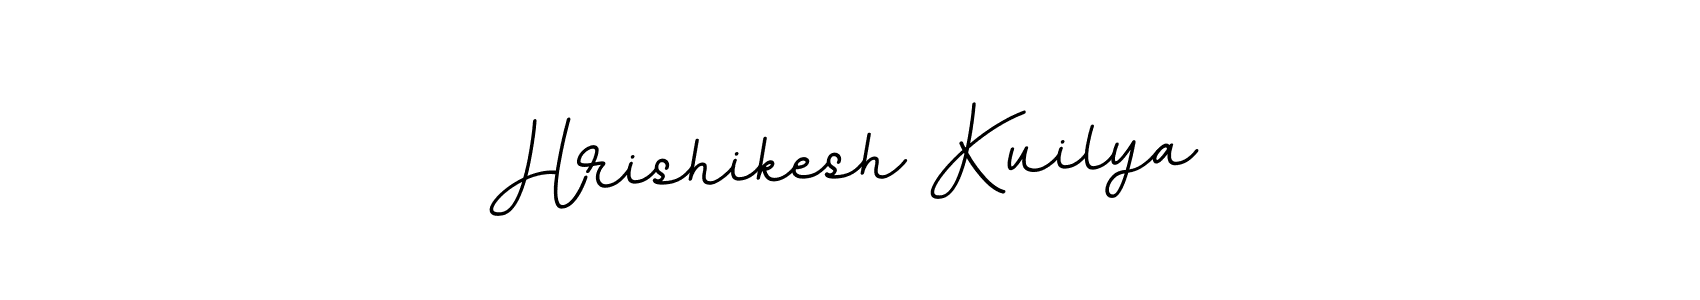 How to Draw Hrishikesh Kuilya signature style? BallpointsItalic-DORy9 is a latest design signature styles for name Hrishikesh Kuilya. Hrishikesh Kuilya signature style 11 images and pictures png